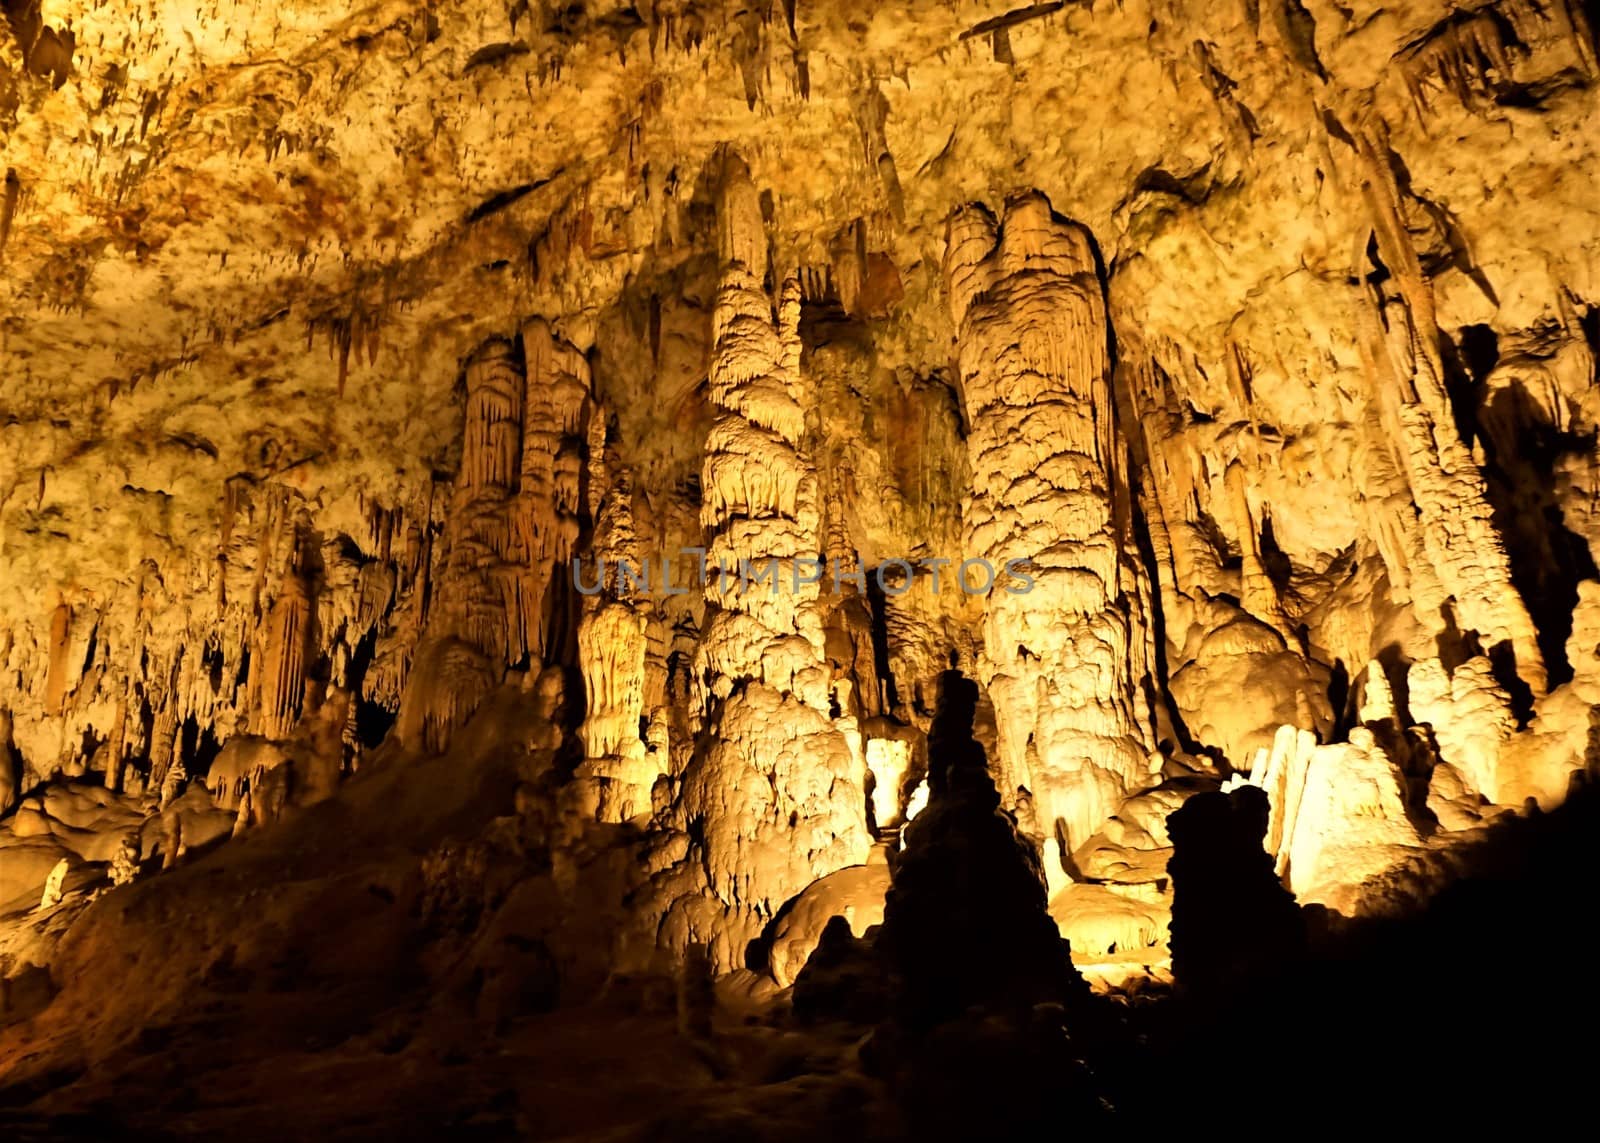 Impressive dripstone columns in the Postojna caves, Slovenia